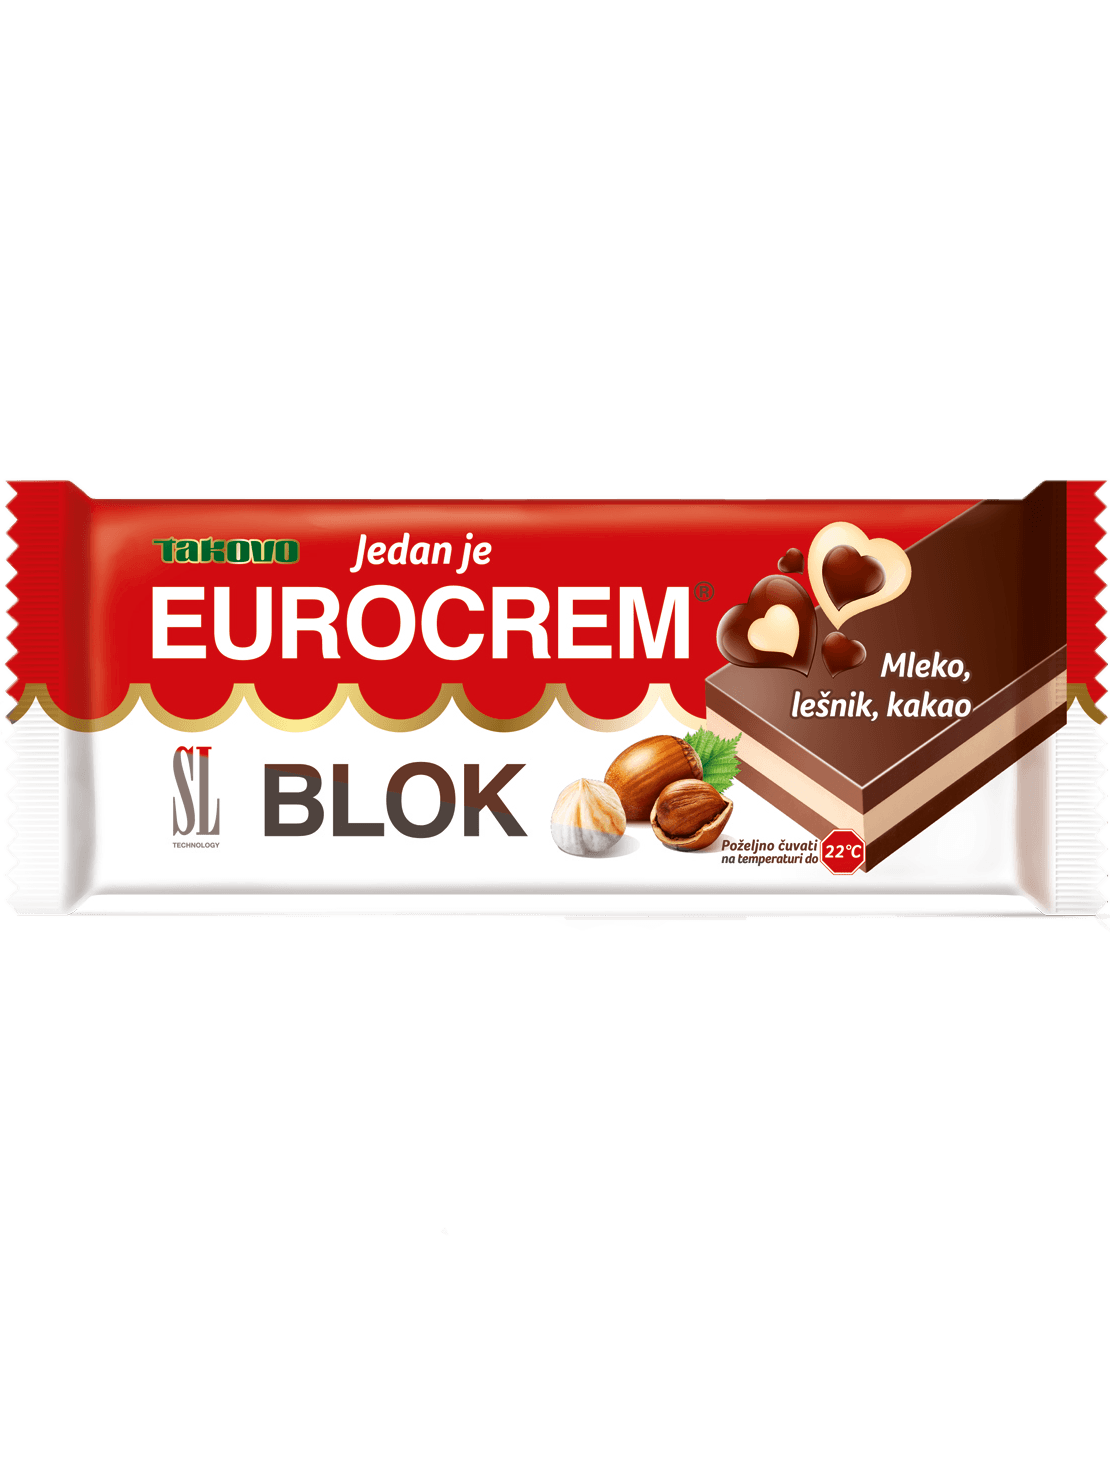 Eurocrem Blok 90g Takovo ⎢Hier bei Bodega Dalmatia kaufen!